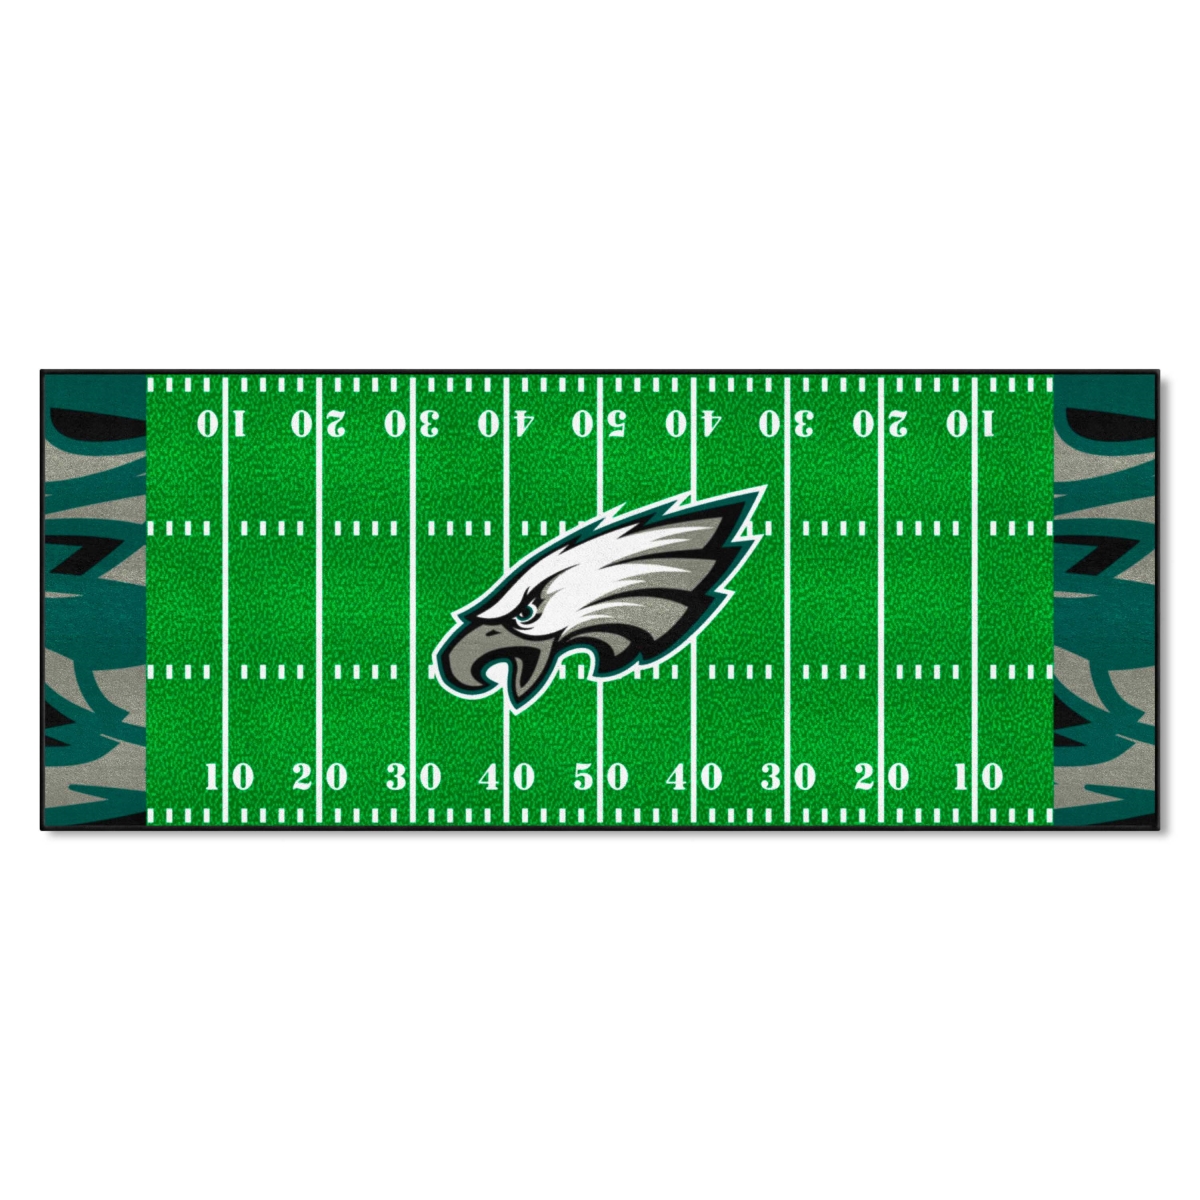 Fanmats 23346 30 x 72 in. Philadelphia Eagles Football Field Runner Mat - XFit Design&#44; Pattern